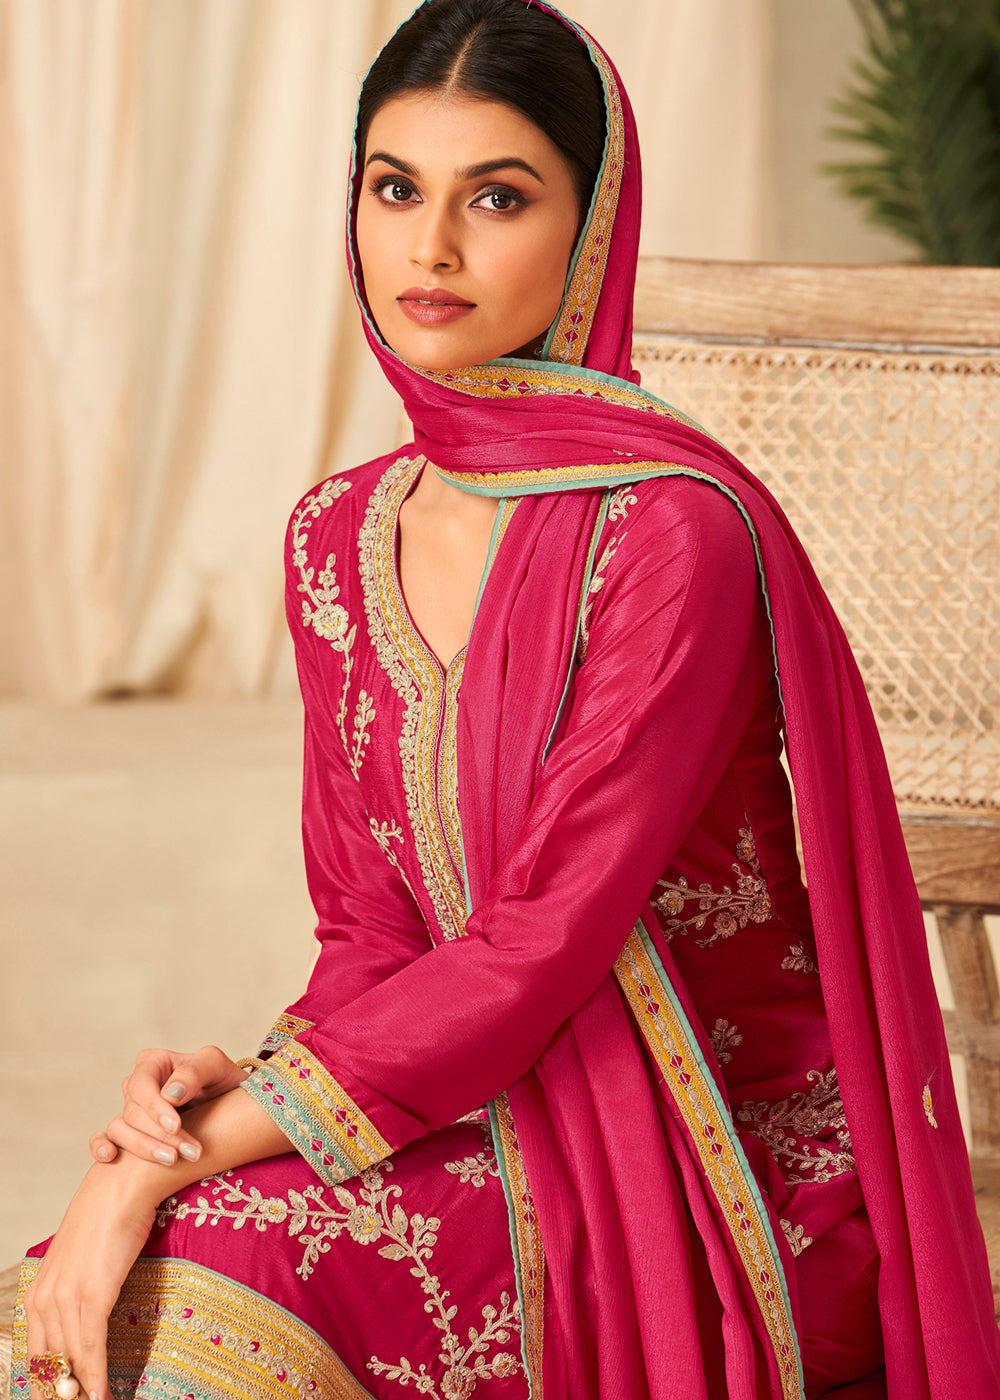 Buy Now Rani Pink Heavy Chinnon Wedding Festive Salwar Suit Online in USA, UK, Canada, Germany, Australia & Worldwide at Empress Clothing.